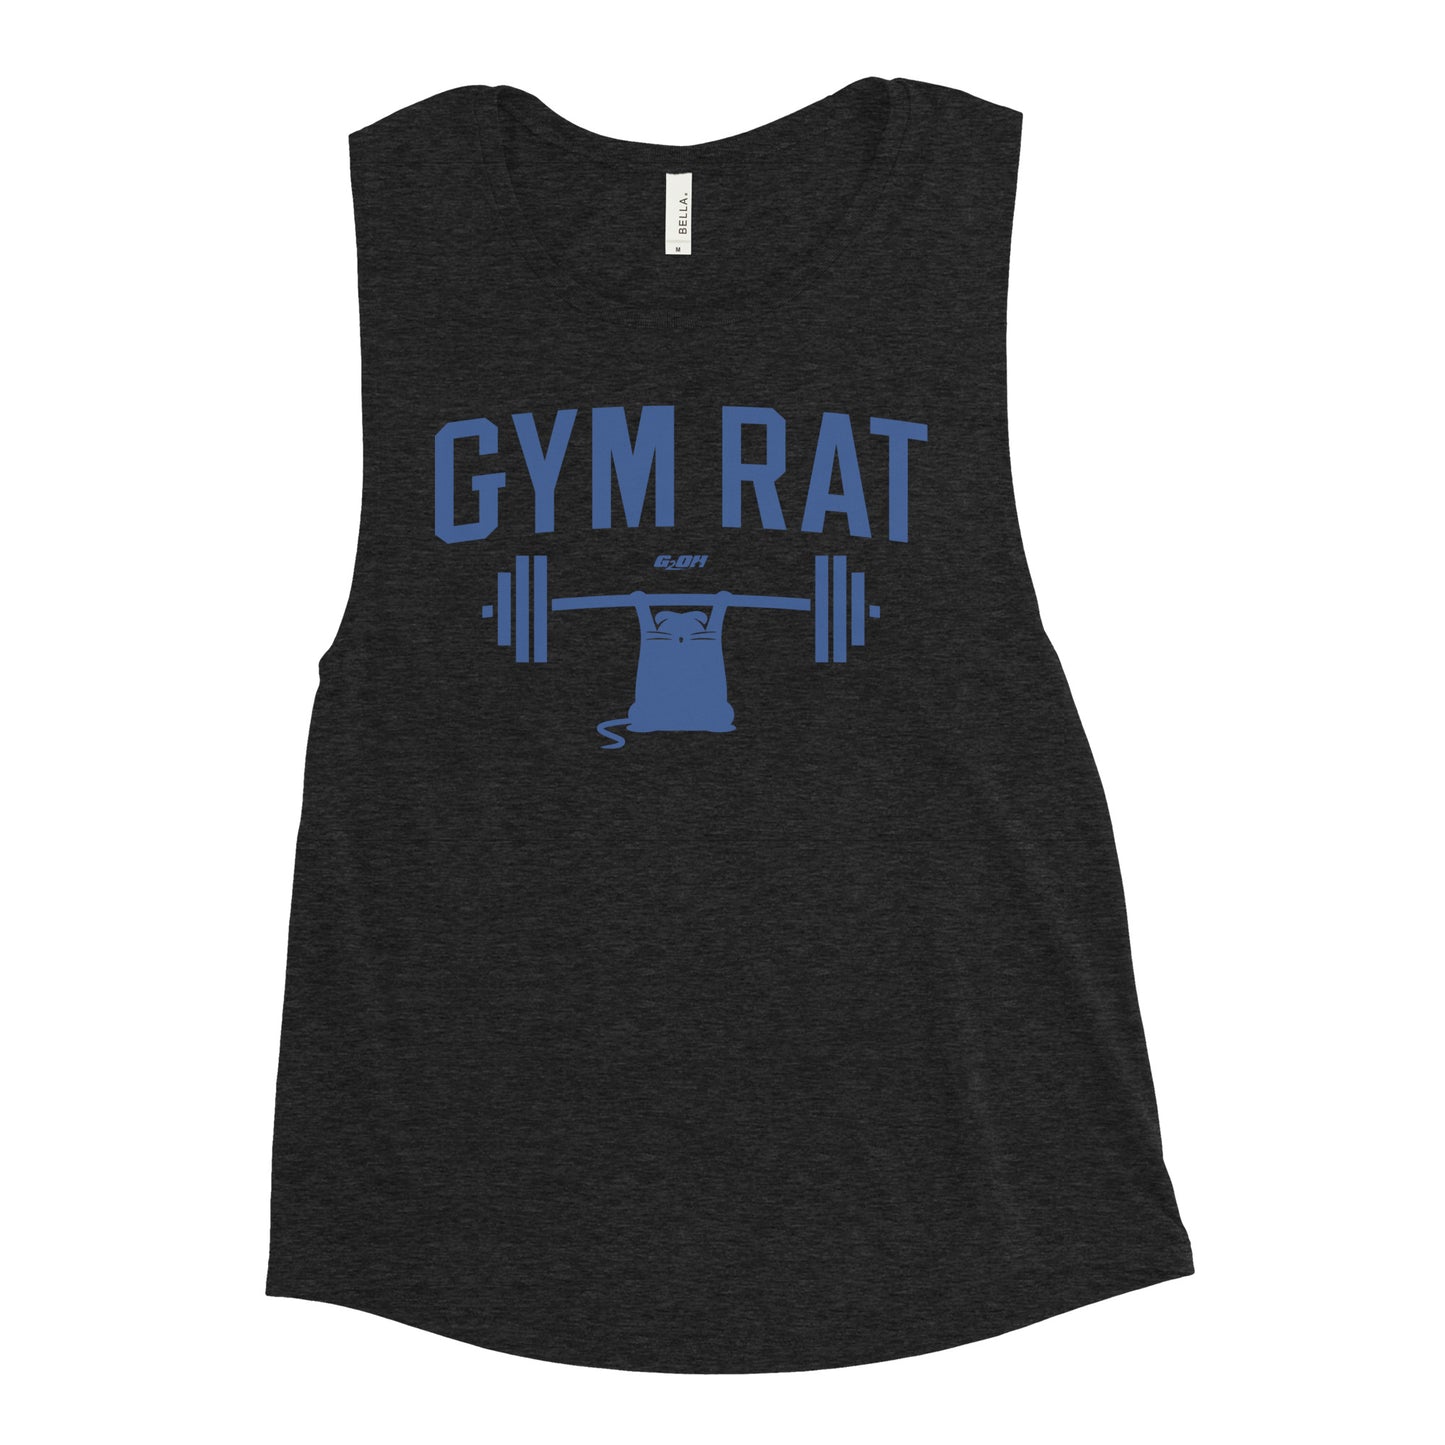 Gym Rat Women's Muscle Tank